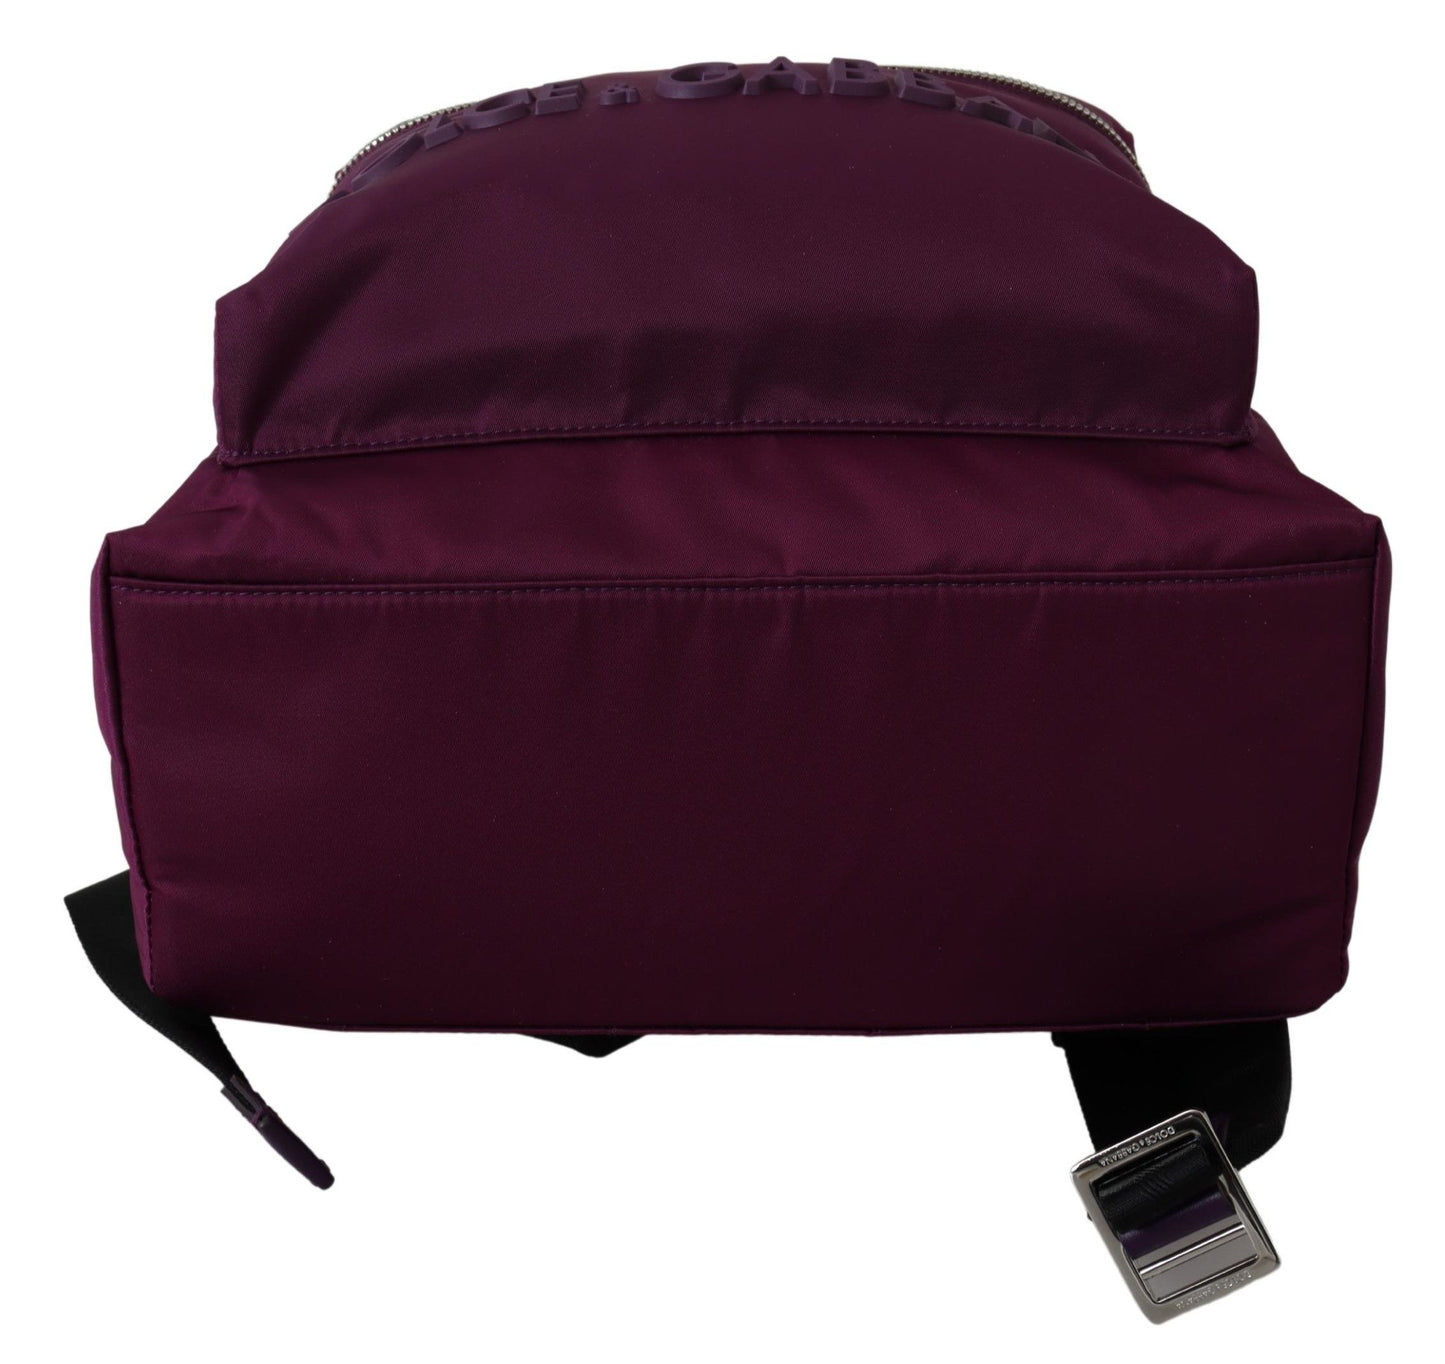 Elegant Maroon Nylon Backpack Bag